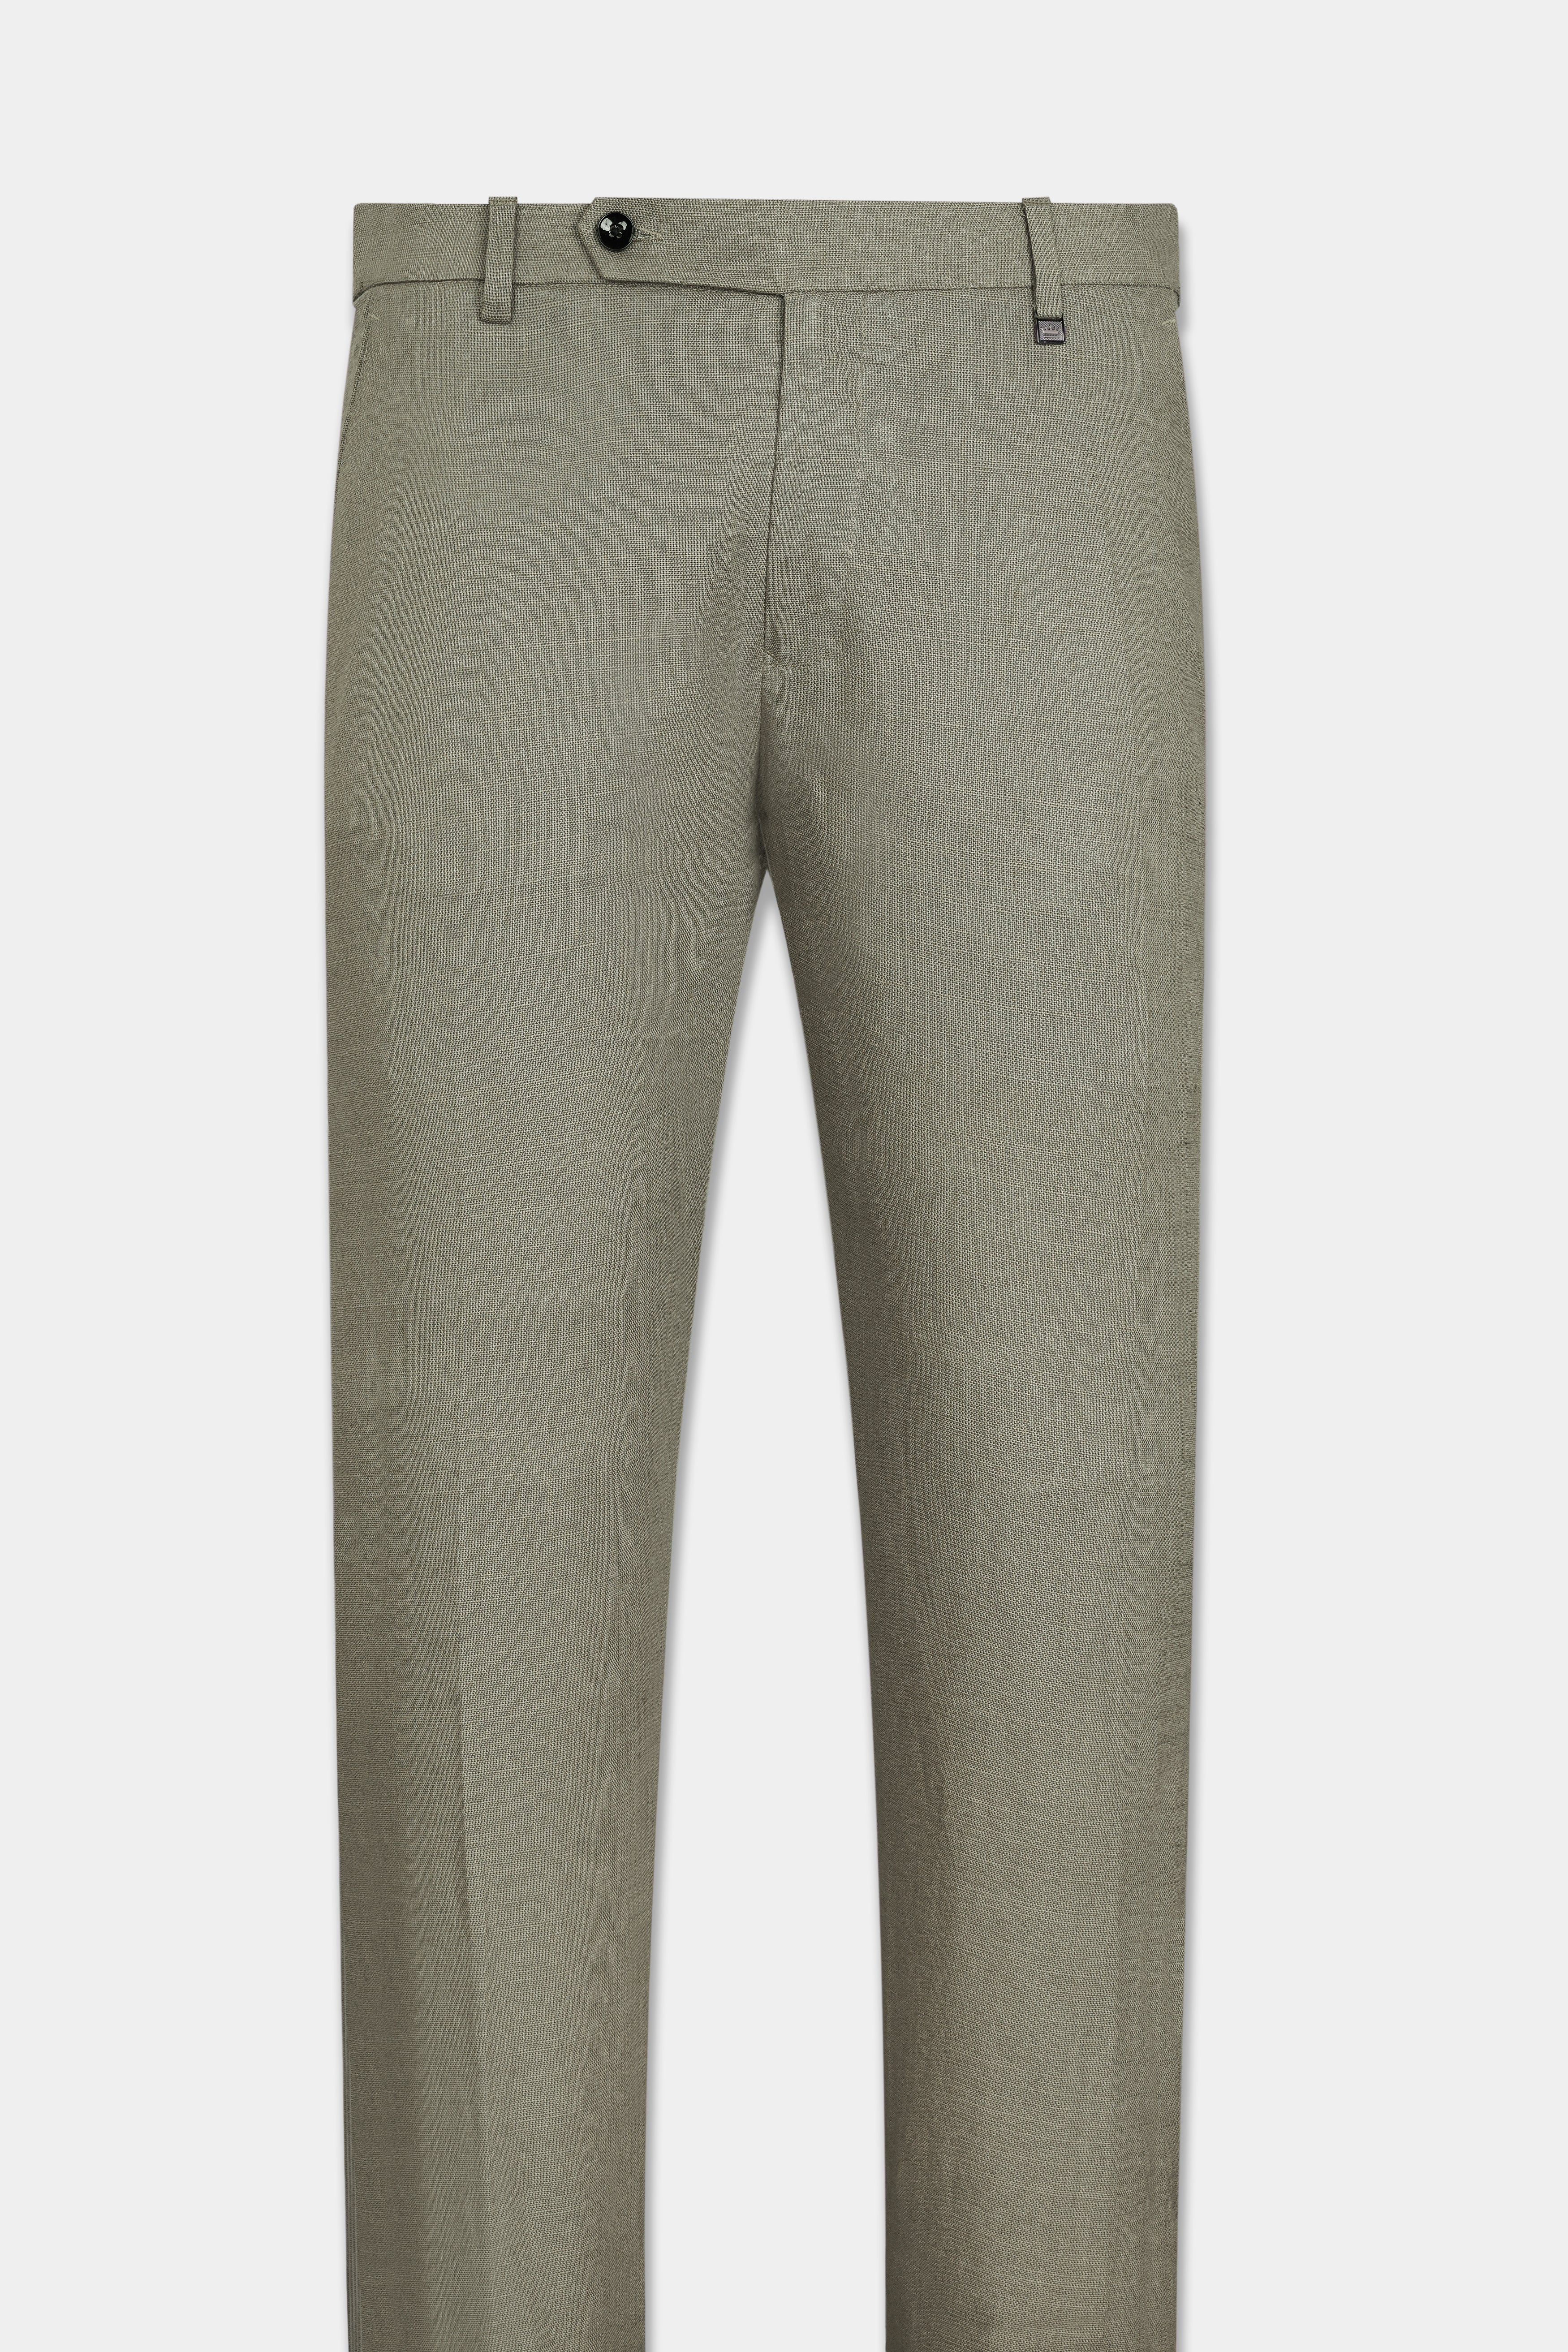 Lemon Grass Green Premium Cotton Stretchable Waistband Pant